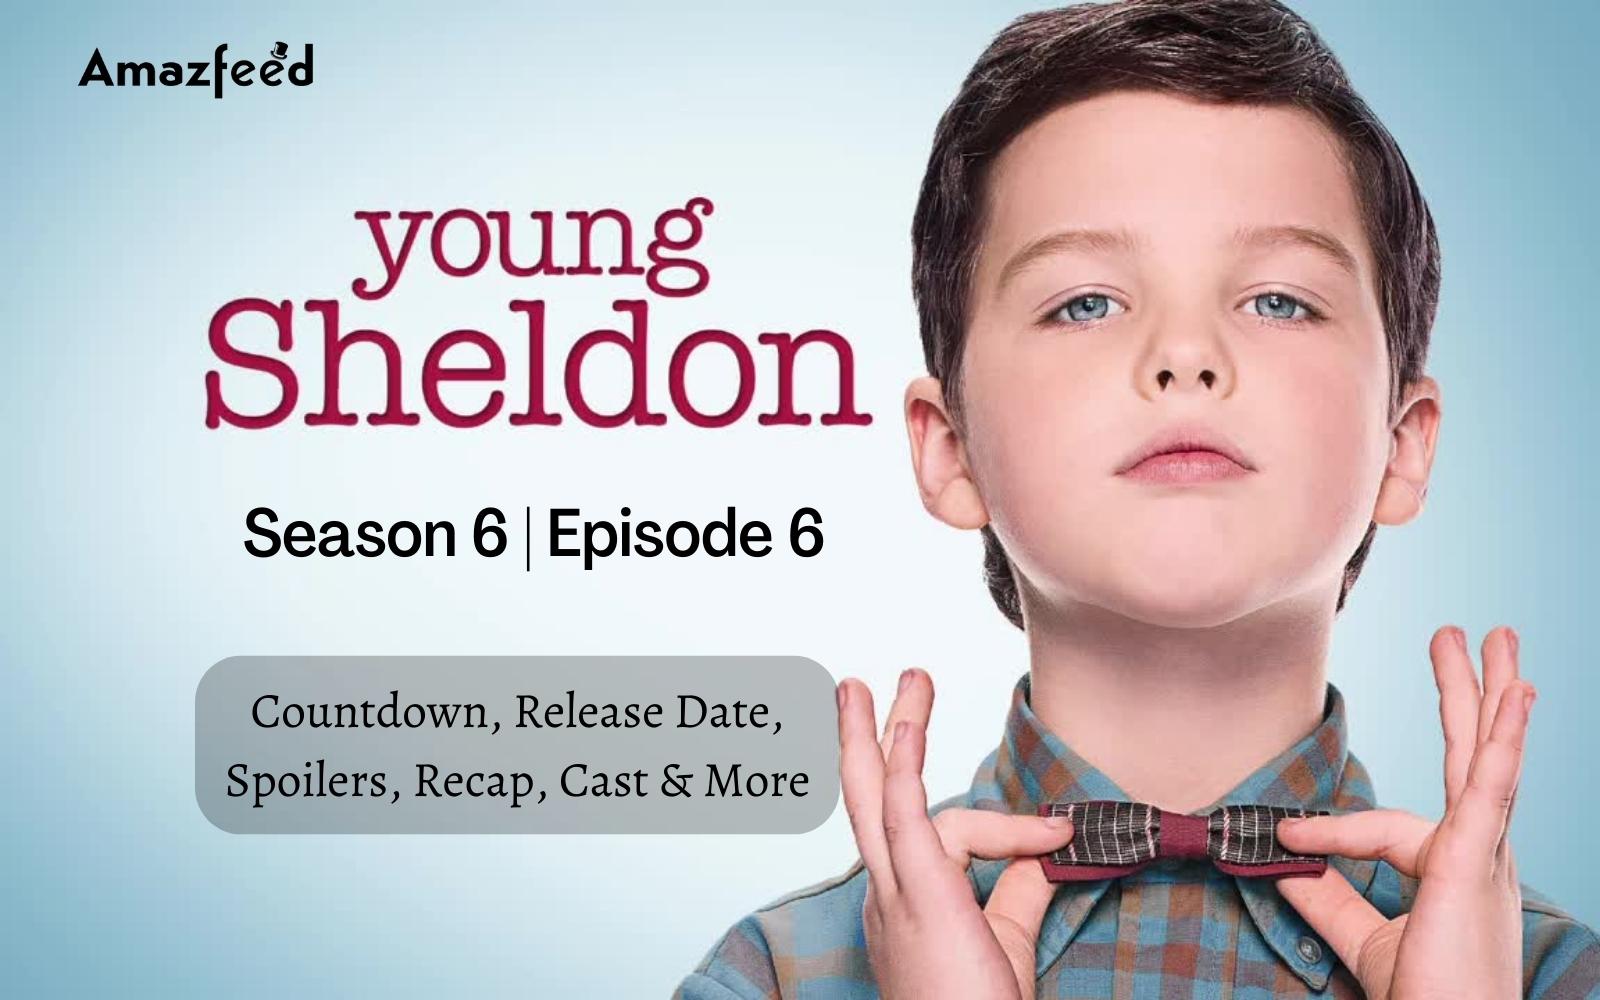 Young Sheldon Season 6 Episode 6 ⇒ Countdown, Release Date, Spoilers, Recap, Cast & News Updates